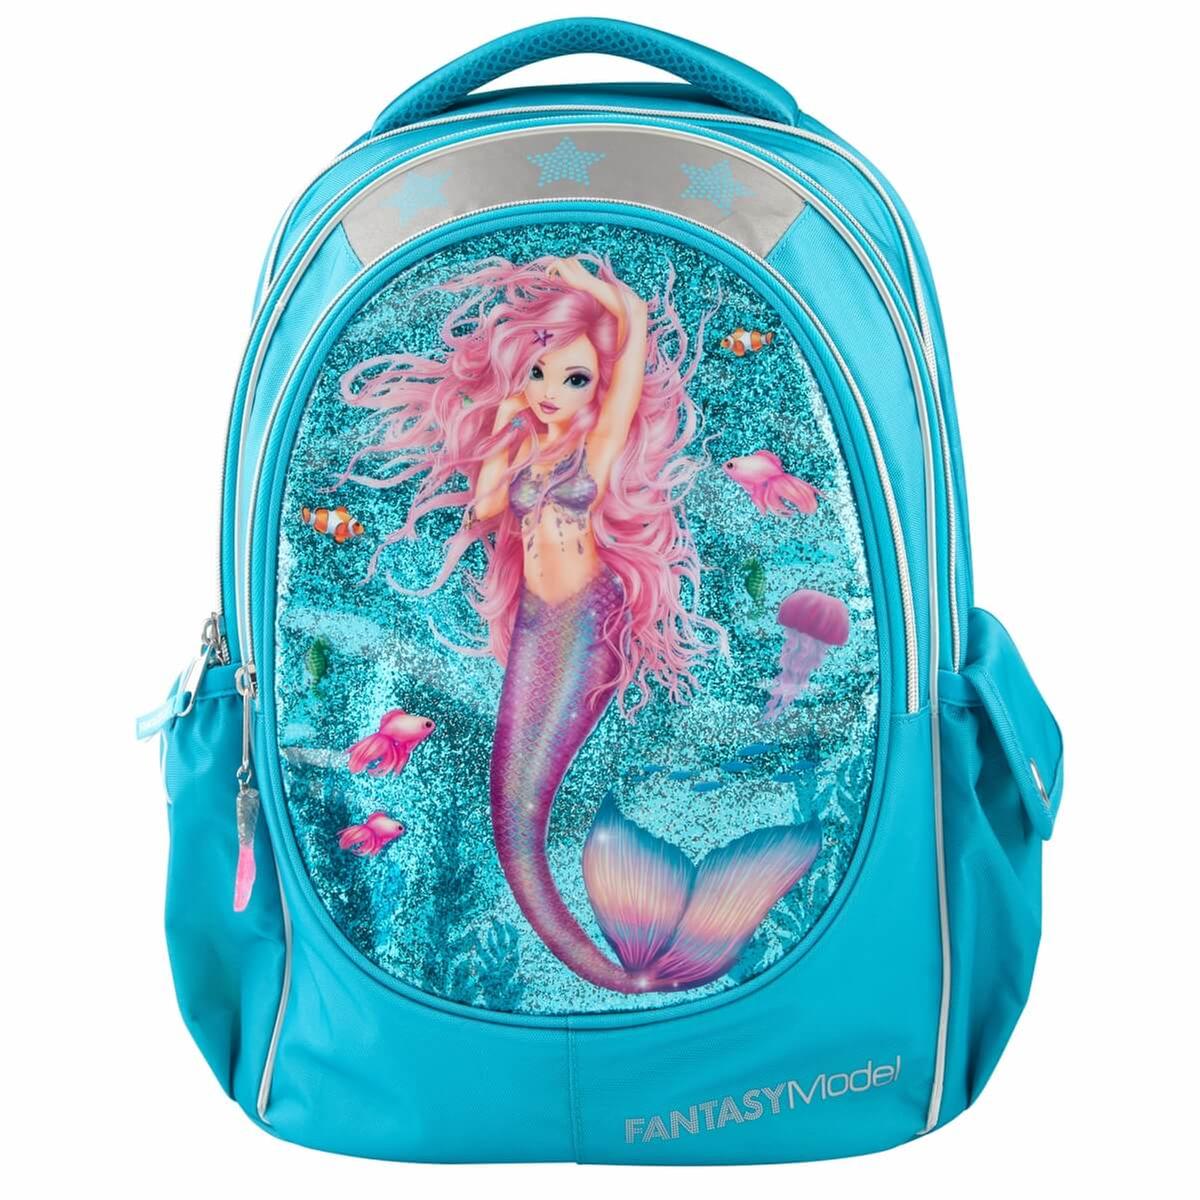 Fantasy Model Mochila Mermaid Depesche Campaña Bts Toys"R"Us España